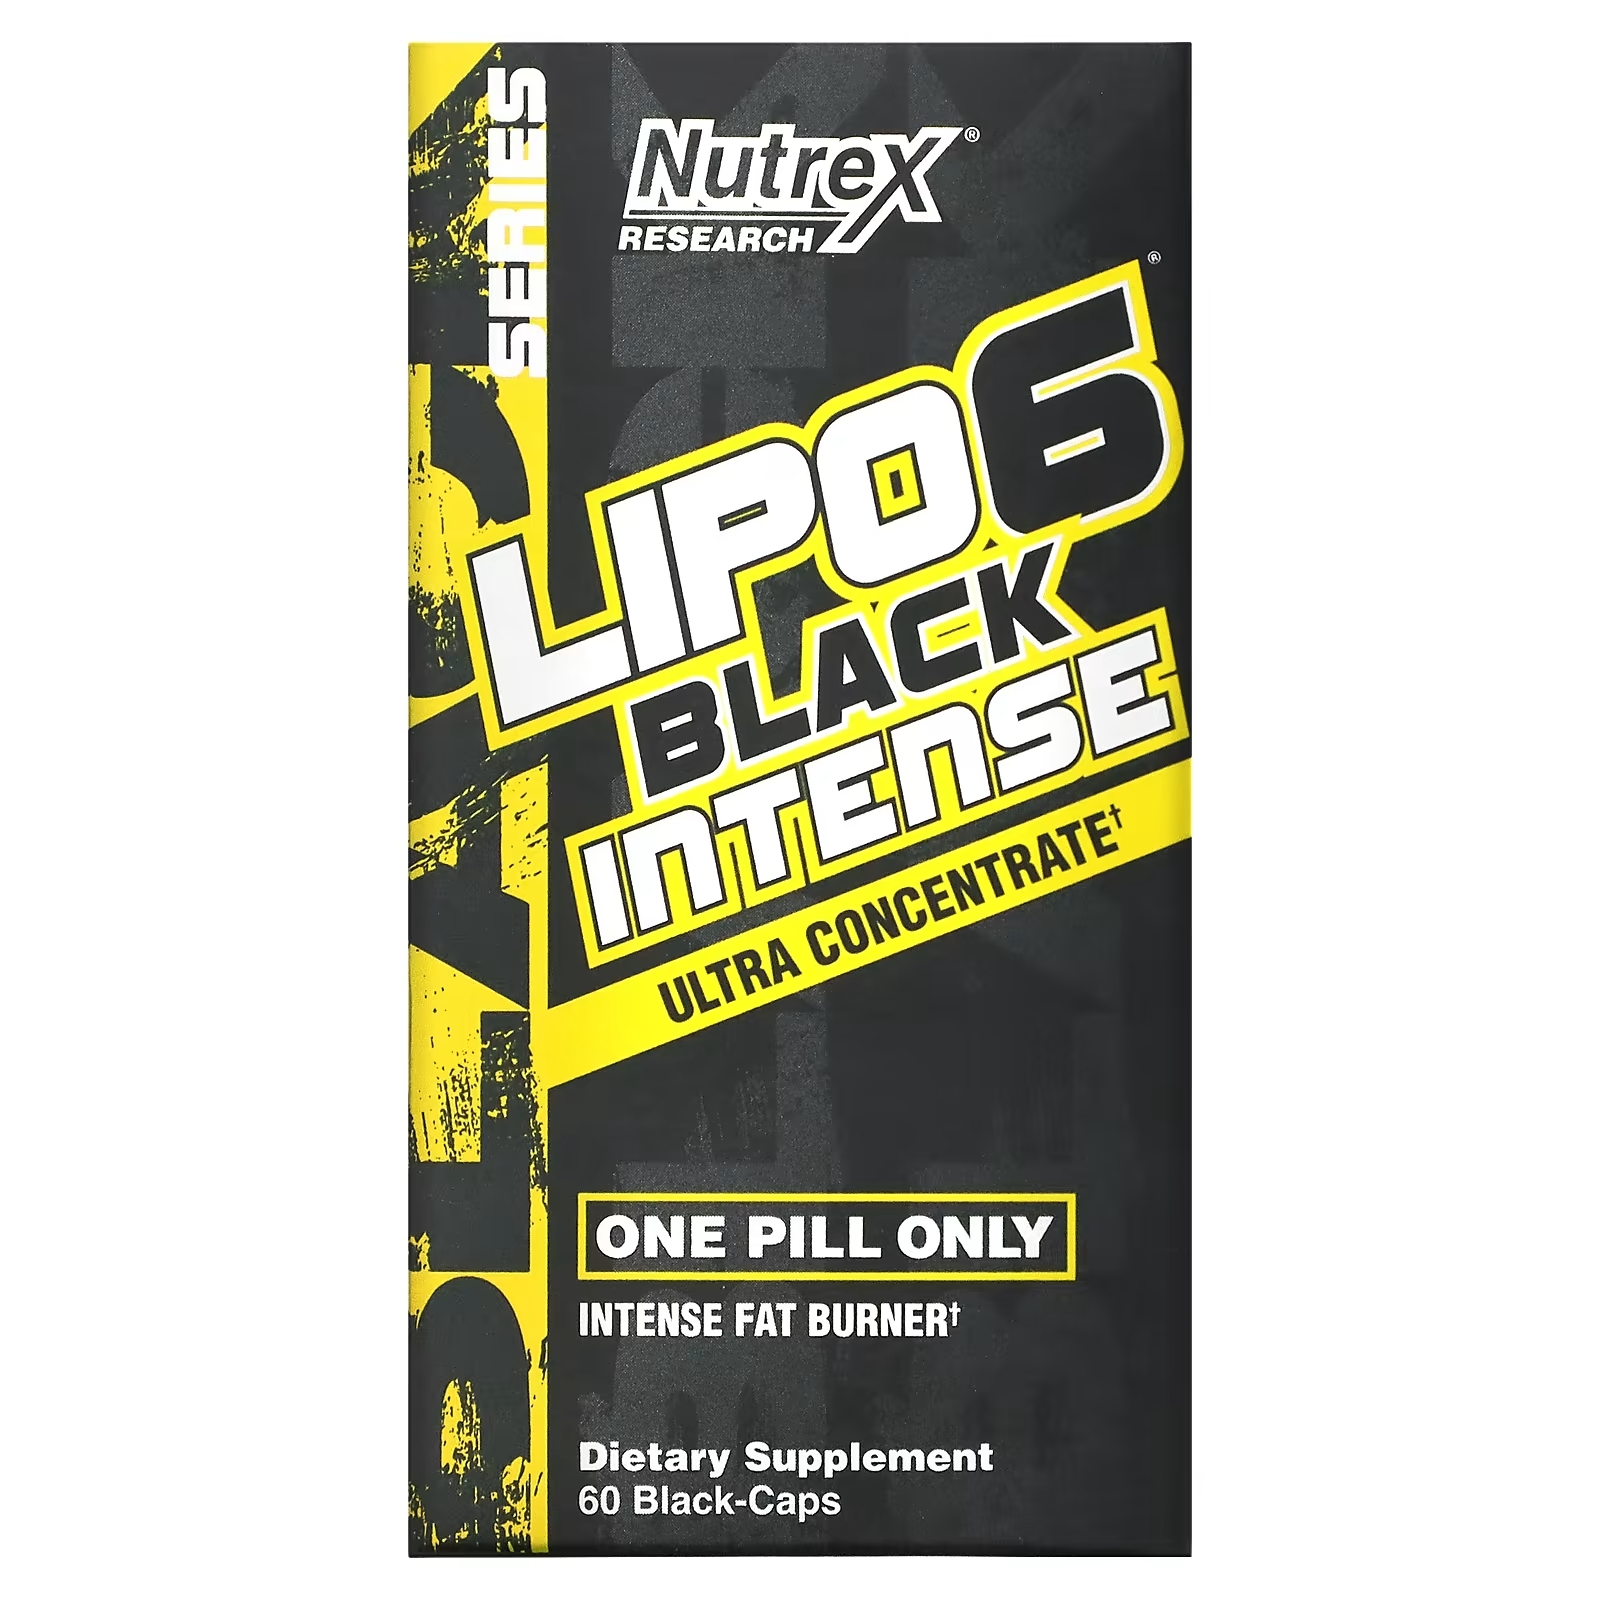 Ультраконцентрат Nutrex Research LIPO-6 Black Intense, 60 капсул nutrex research black series vitrix с nts 6 60 капсул